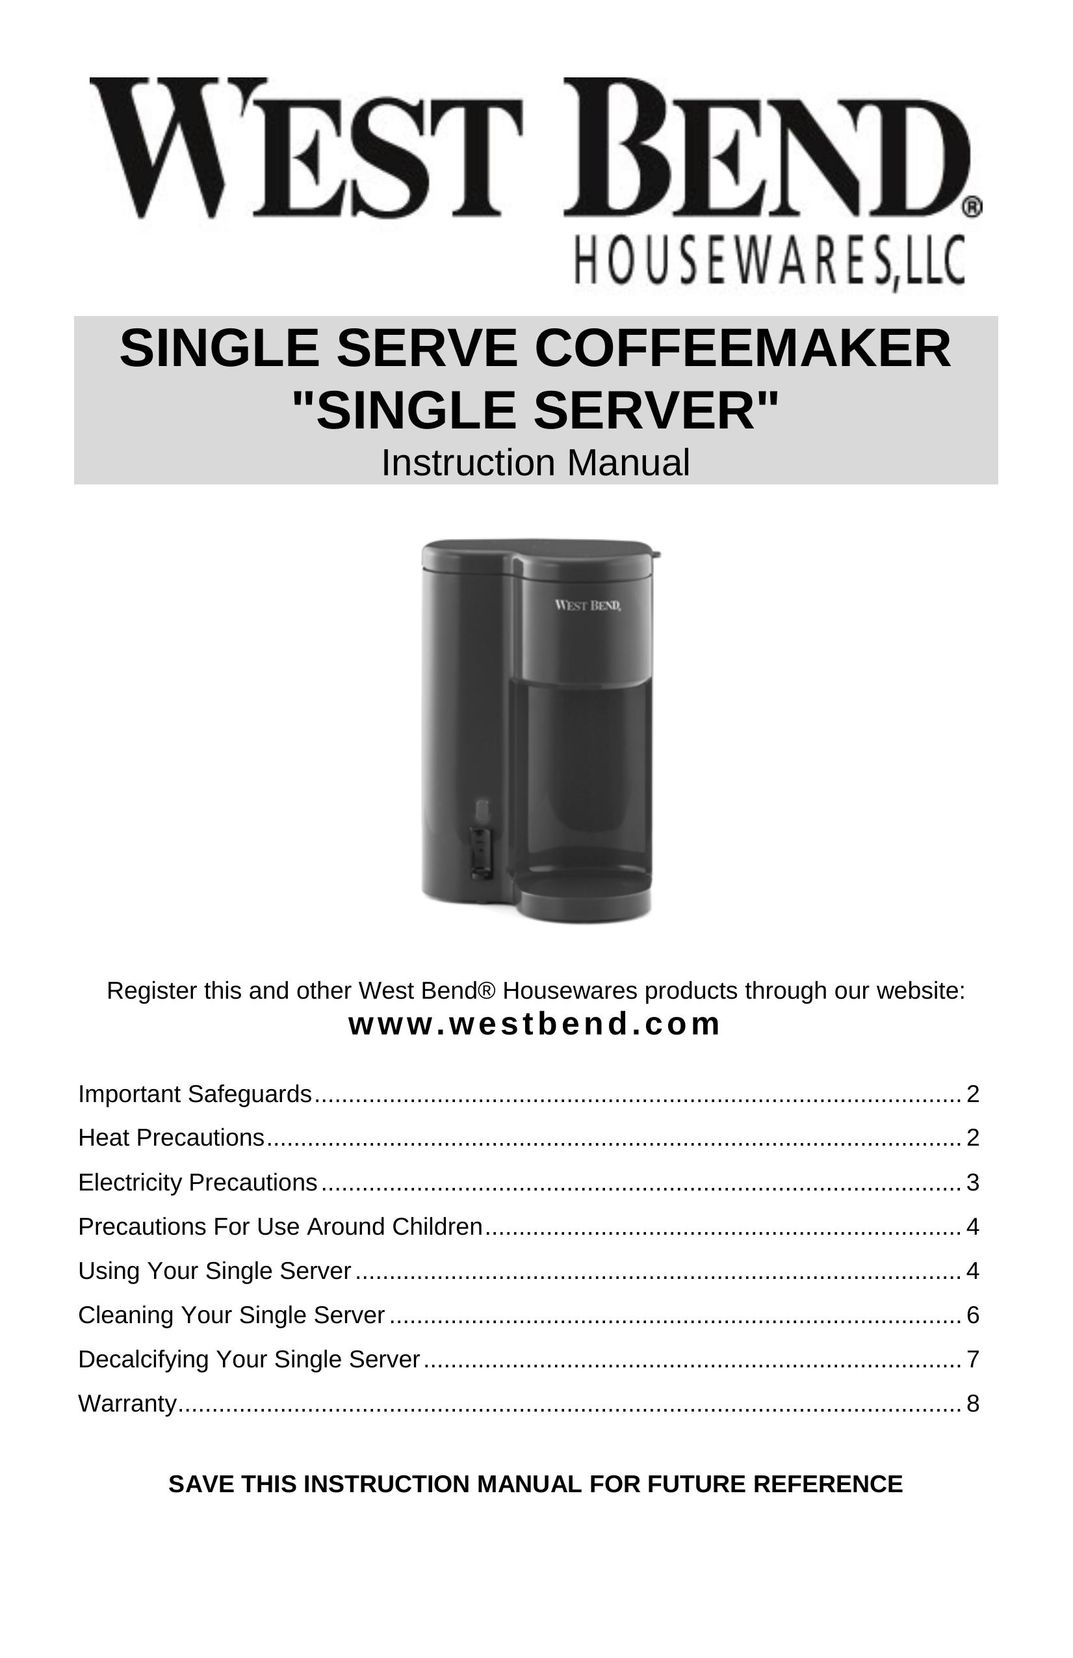 West Bend SINGLE SERVE COFFEEMAKER Coffeemaker User Manual